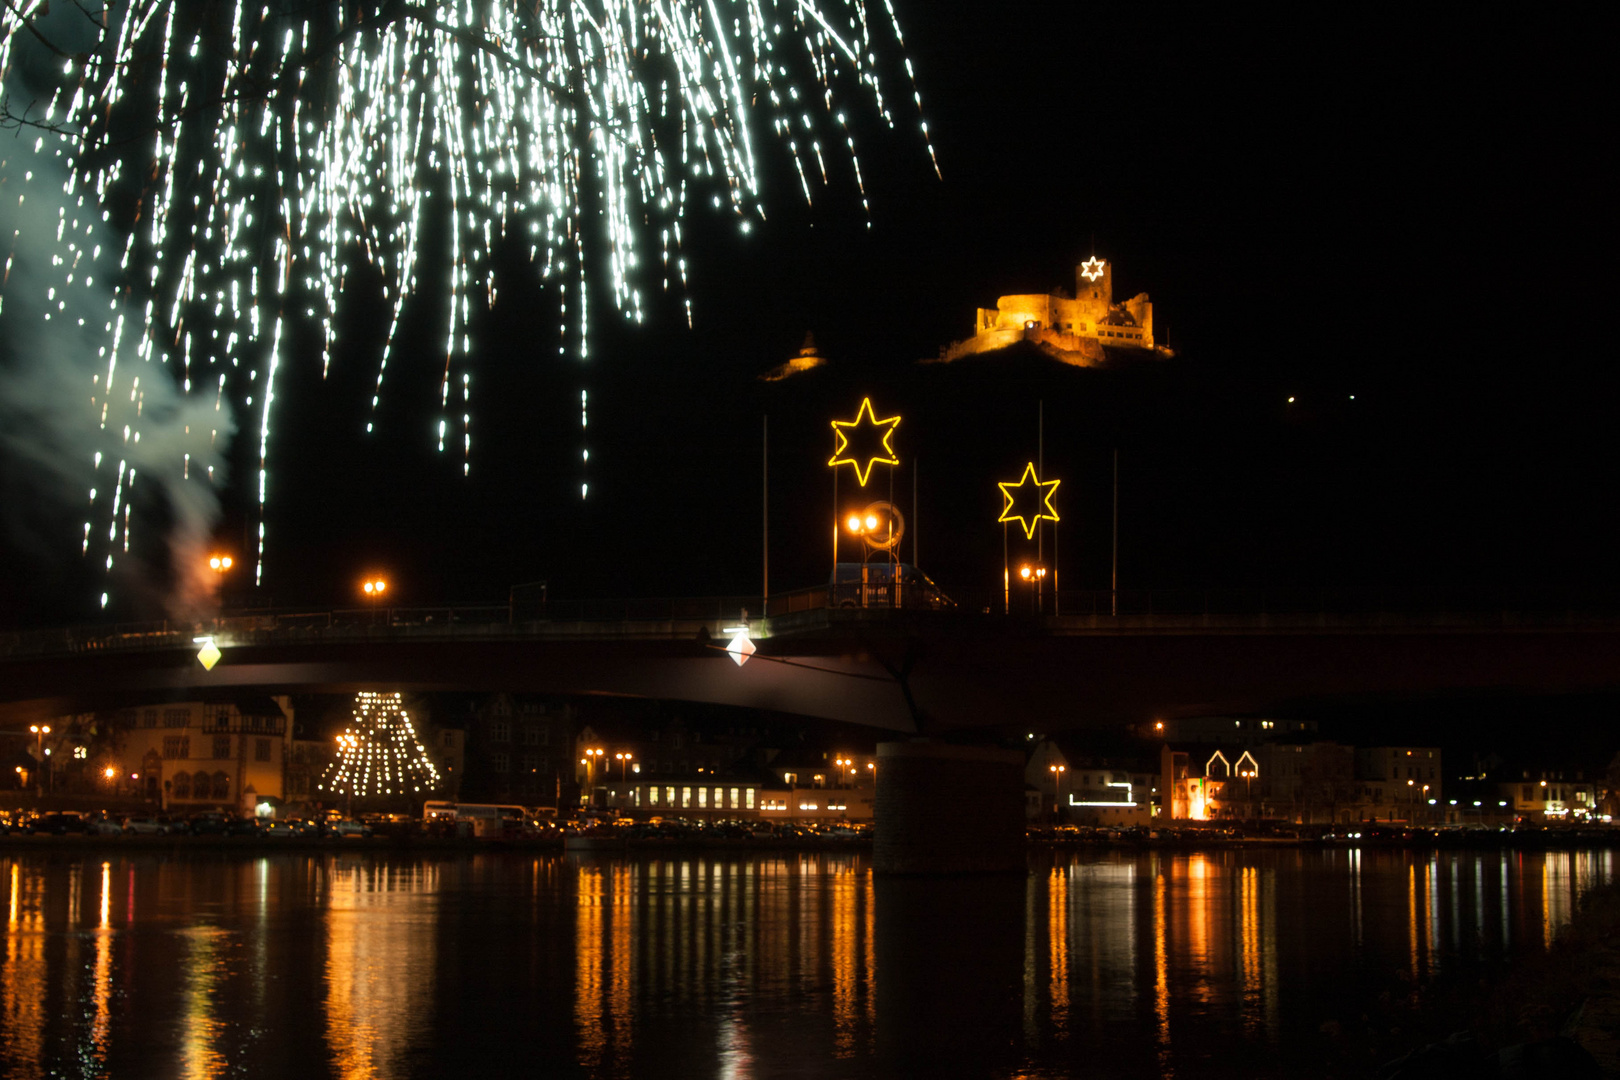 Weihnachts Feuerwerk in Bernkastel-Kues